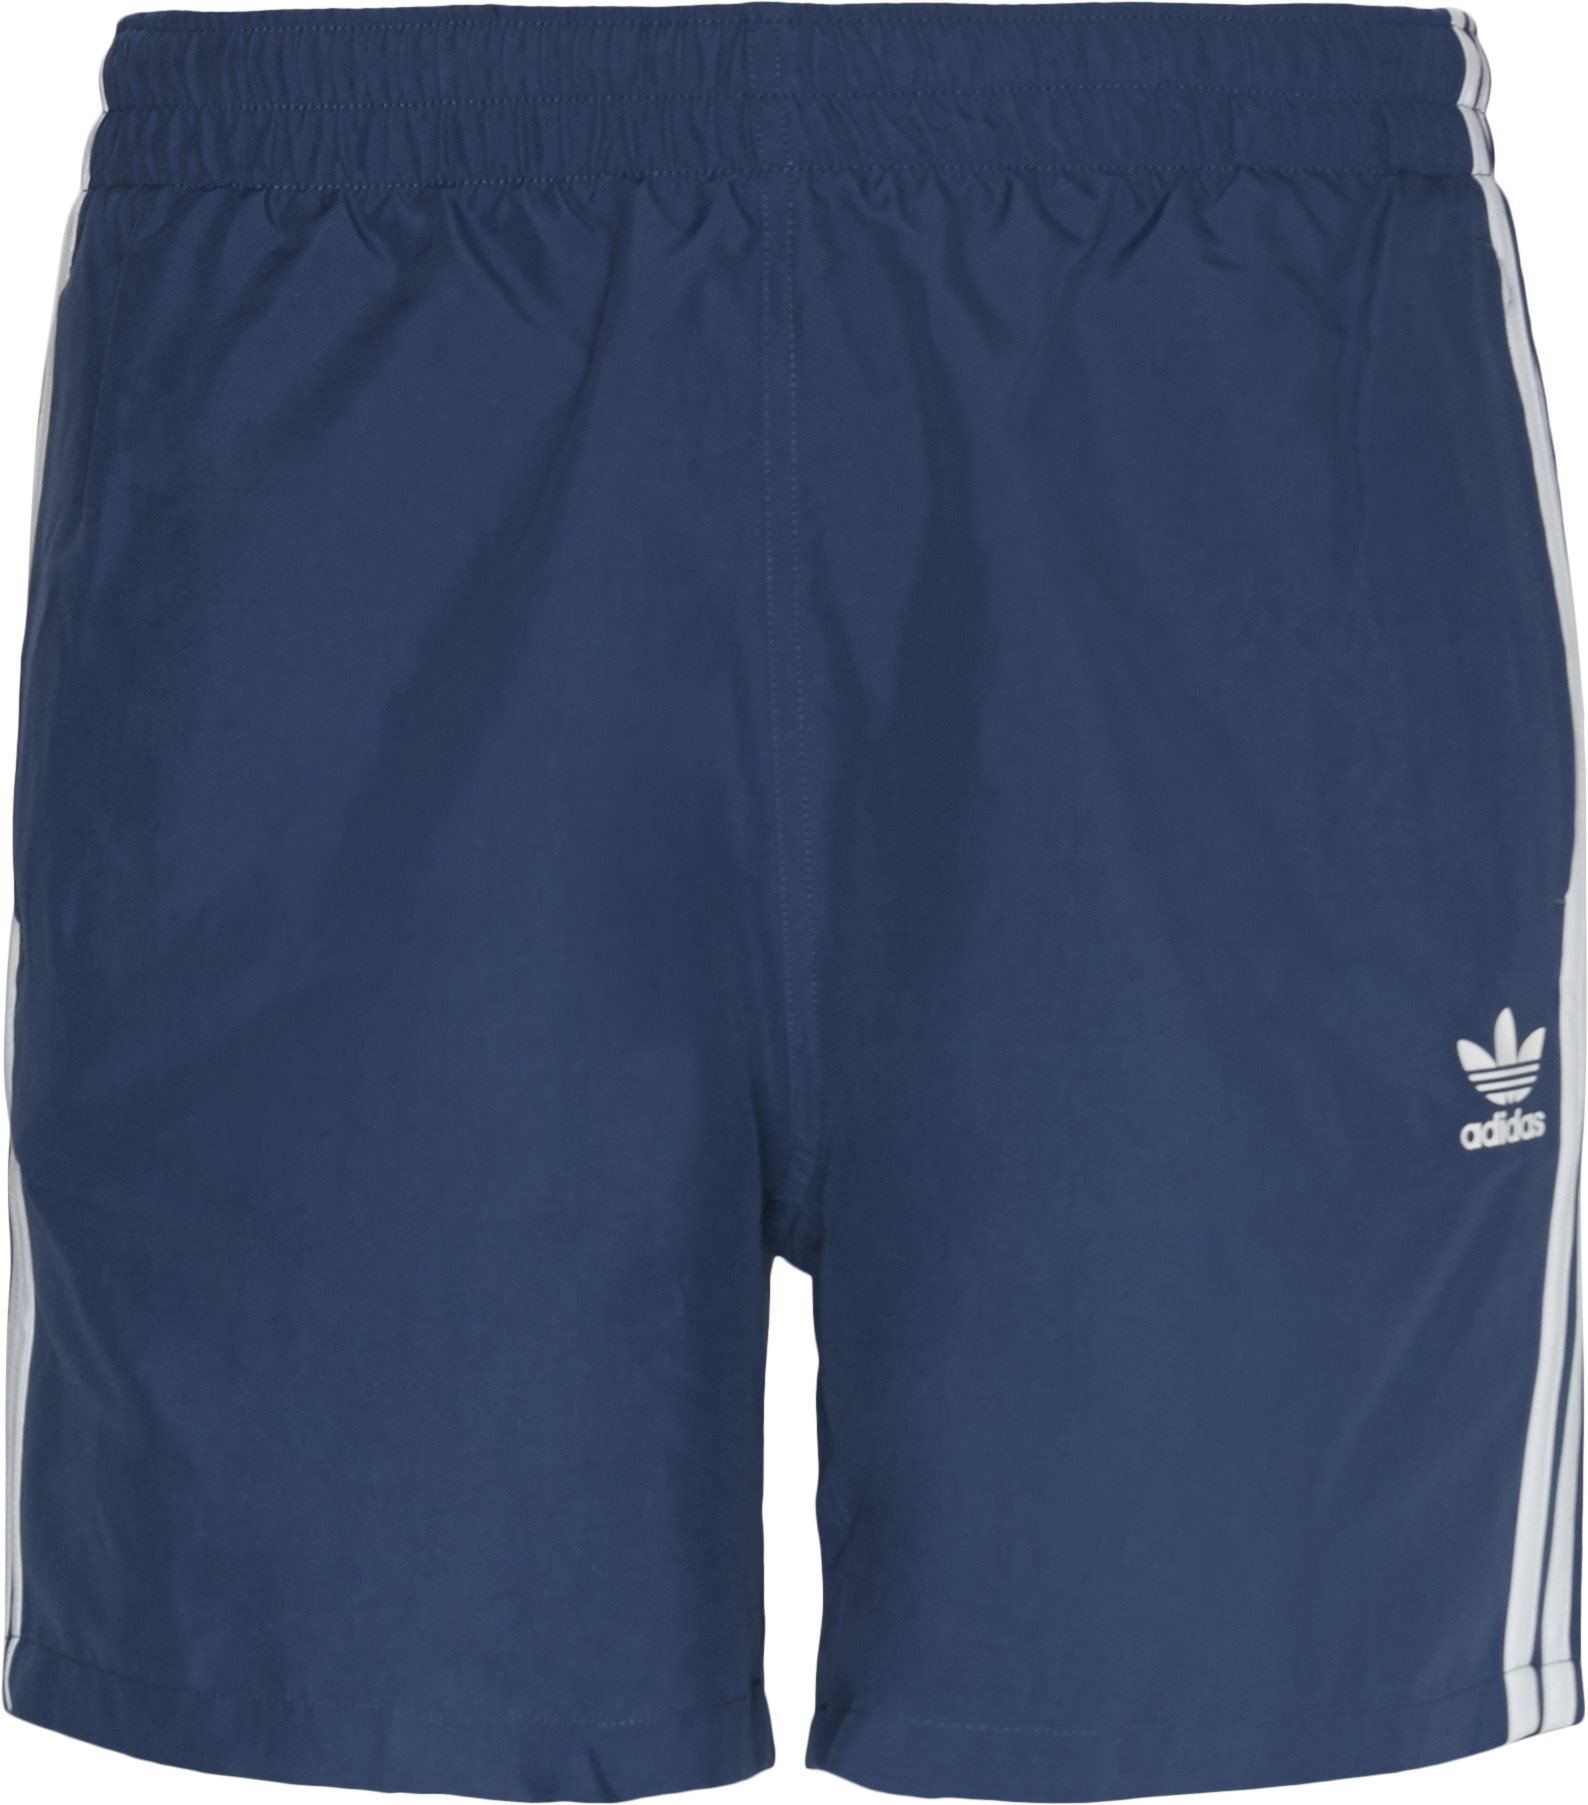 3 randiga badshorts - Shorts - Regular fit - Blå